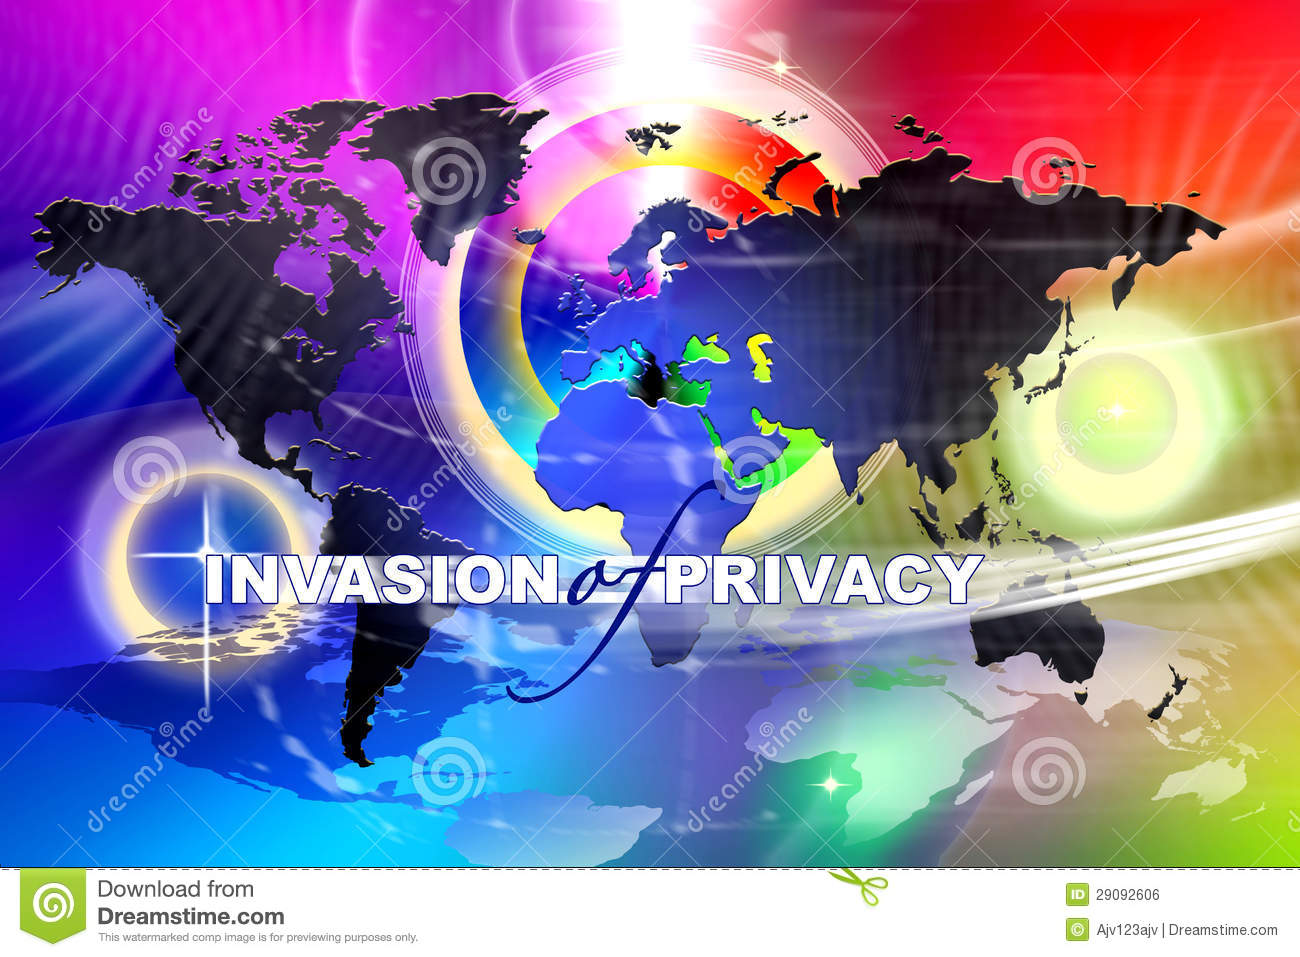 privacyinvasion